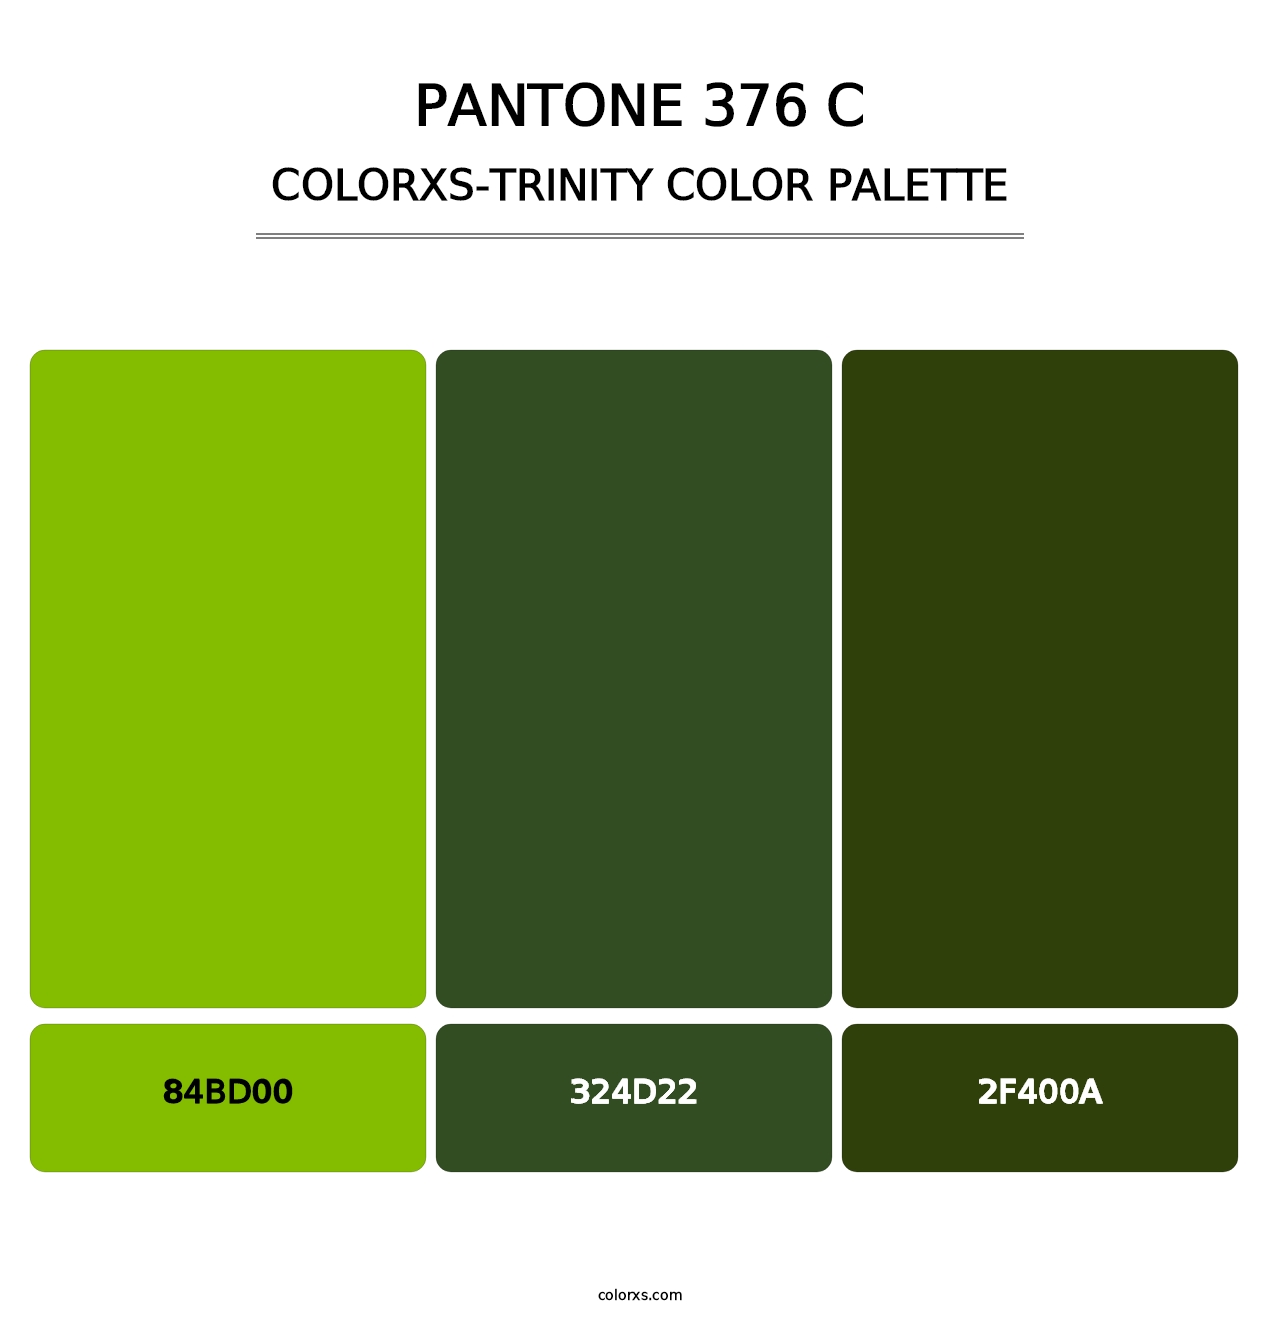 PANTONE 376 C - Colorxs Trinity Palette